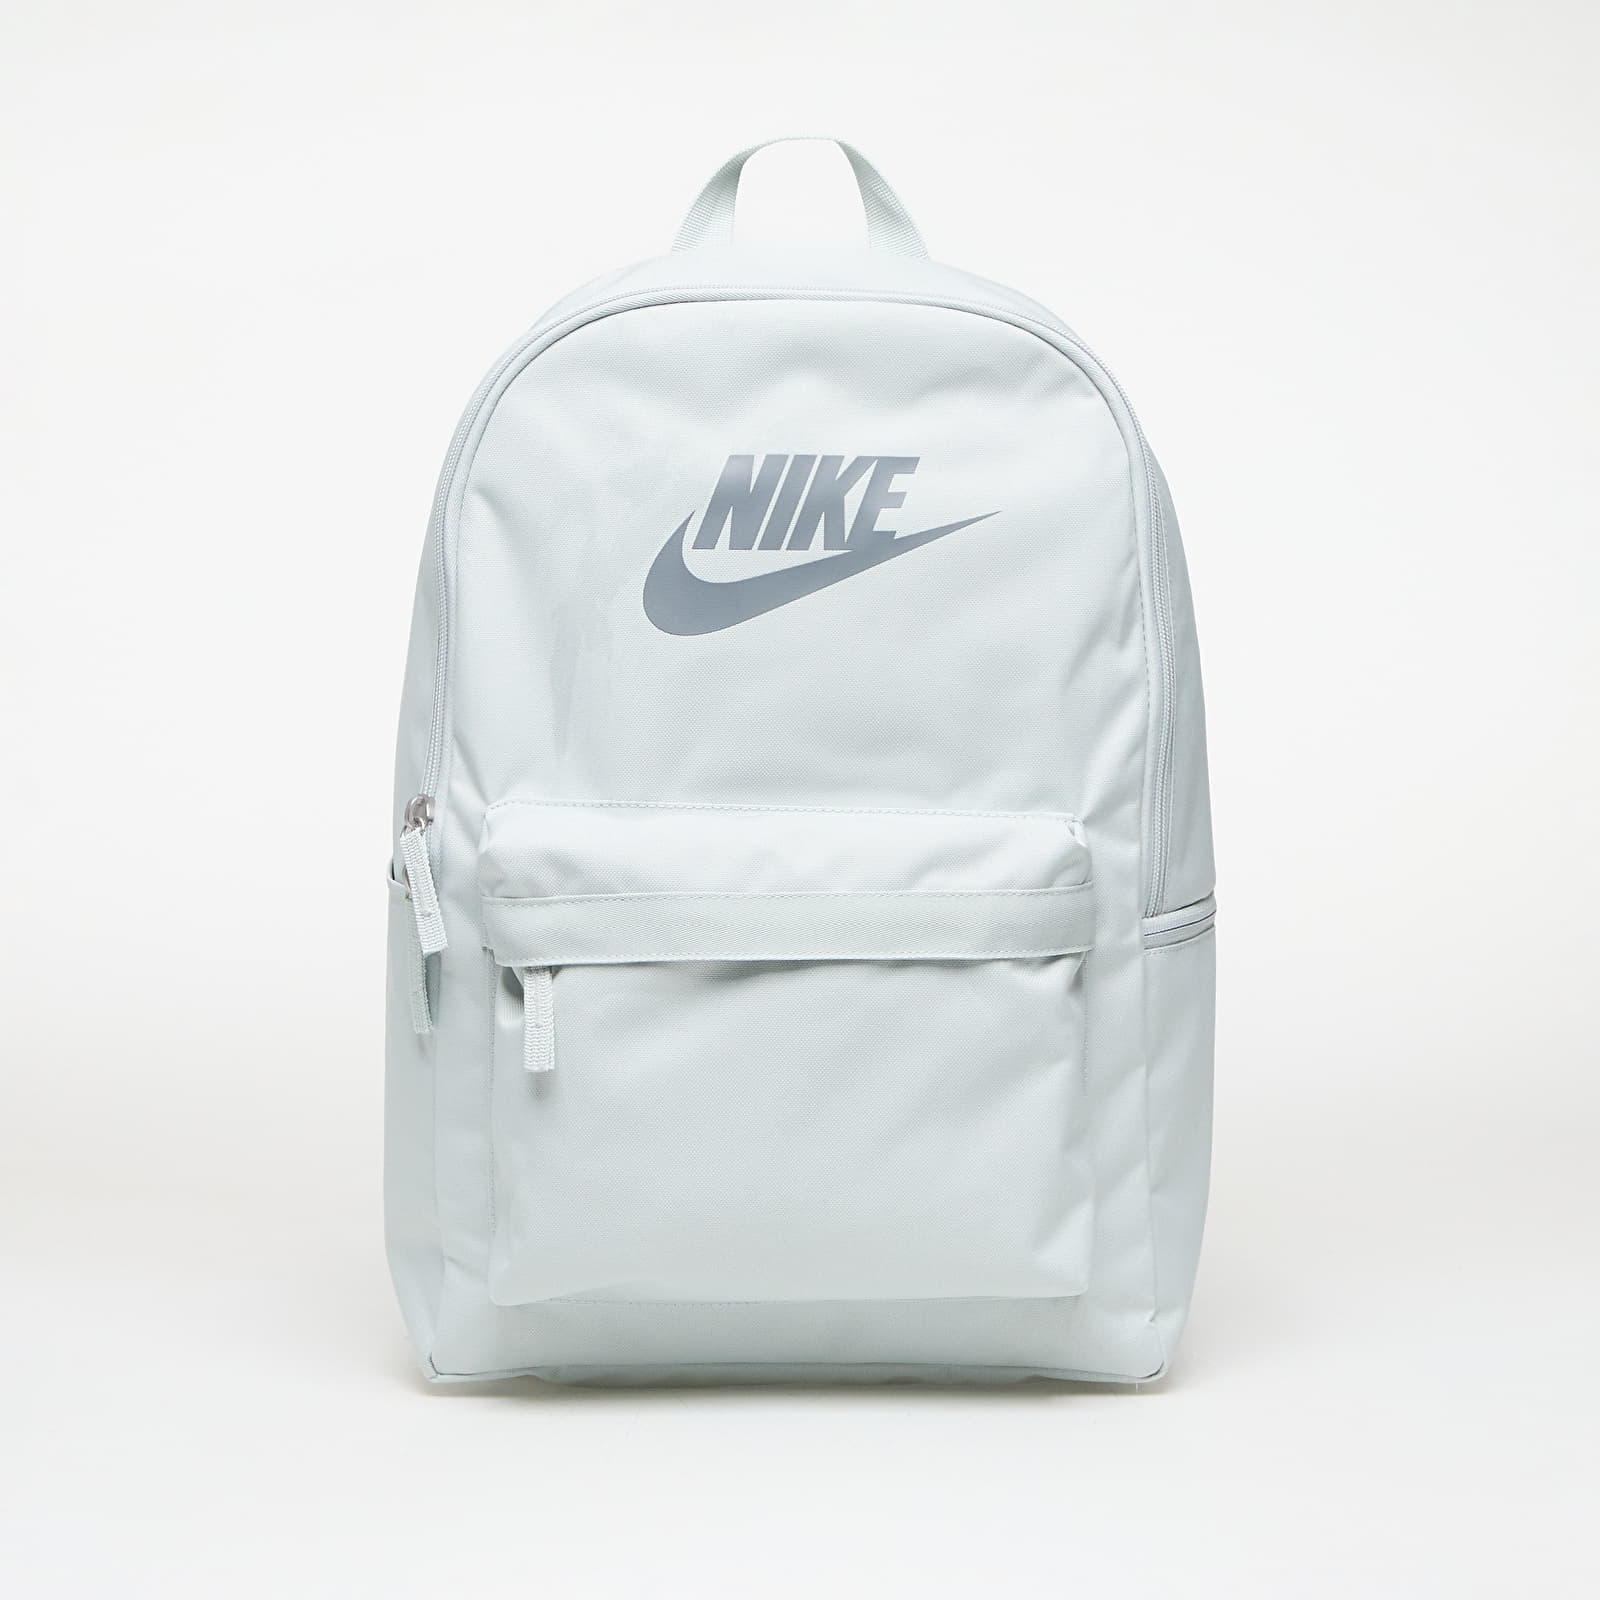 Nike Heritage Backpack Light Silver/ Light Silver/ Smoke Grey